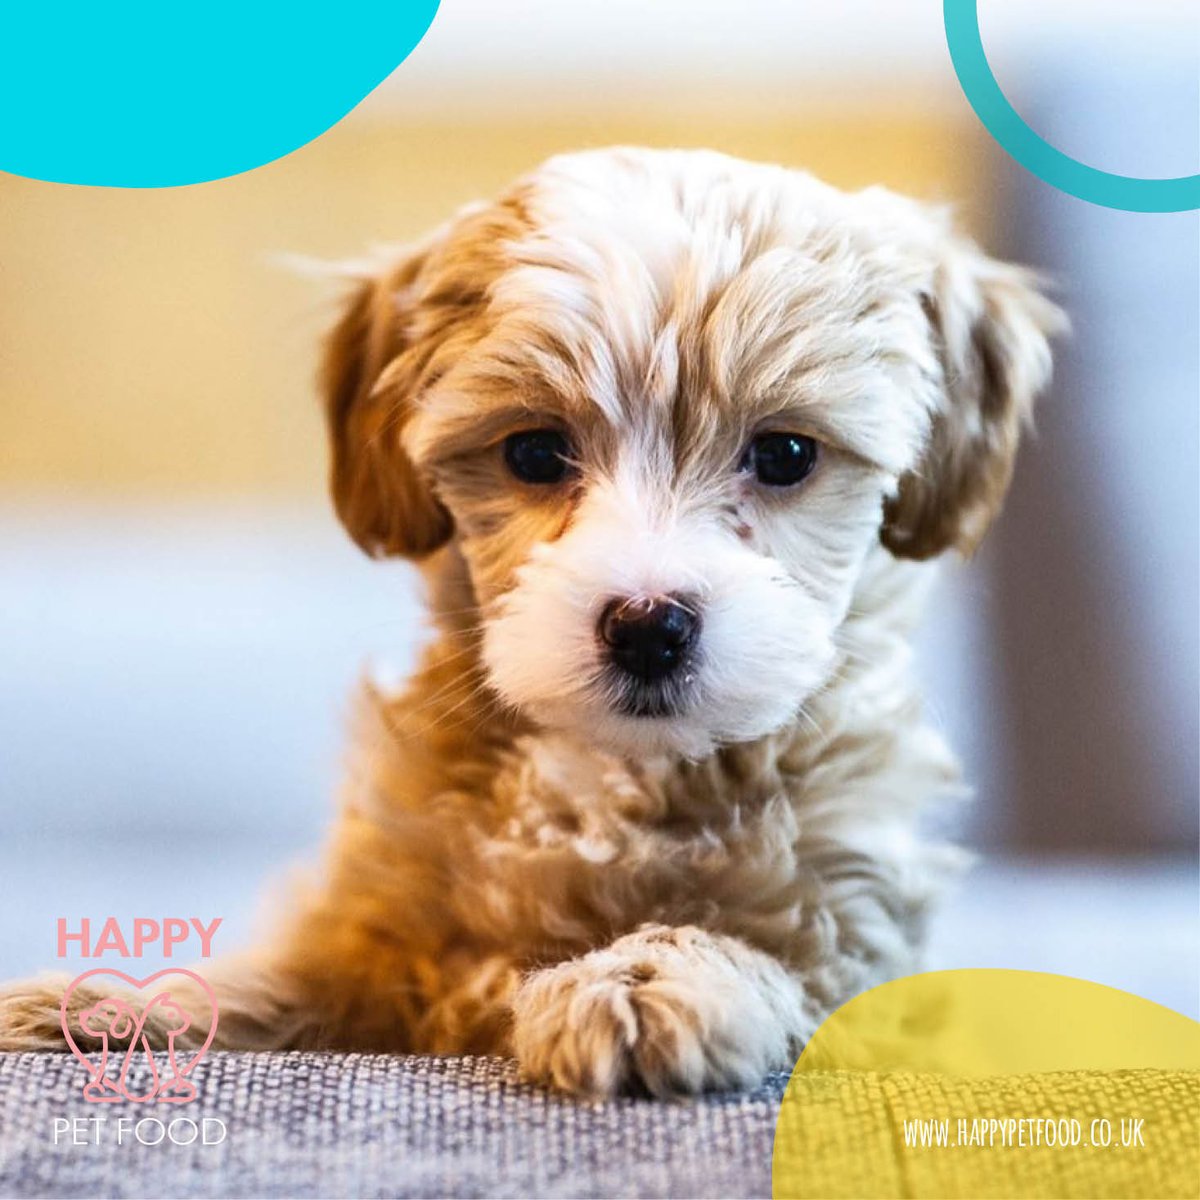 Happy Dog, Happy Life...
#happypeople #happypets  #happydog #happycat #happypetfood #happydoghappylife  #happycathappylife  #UK #London #petfood